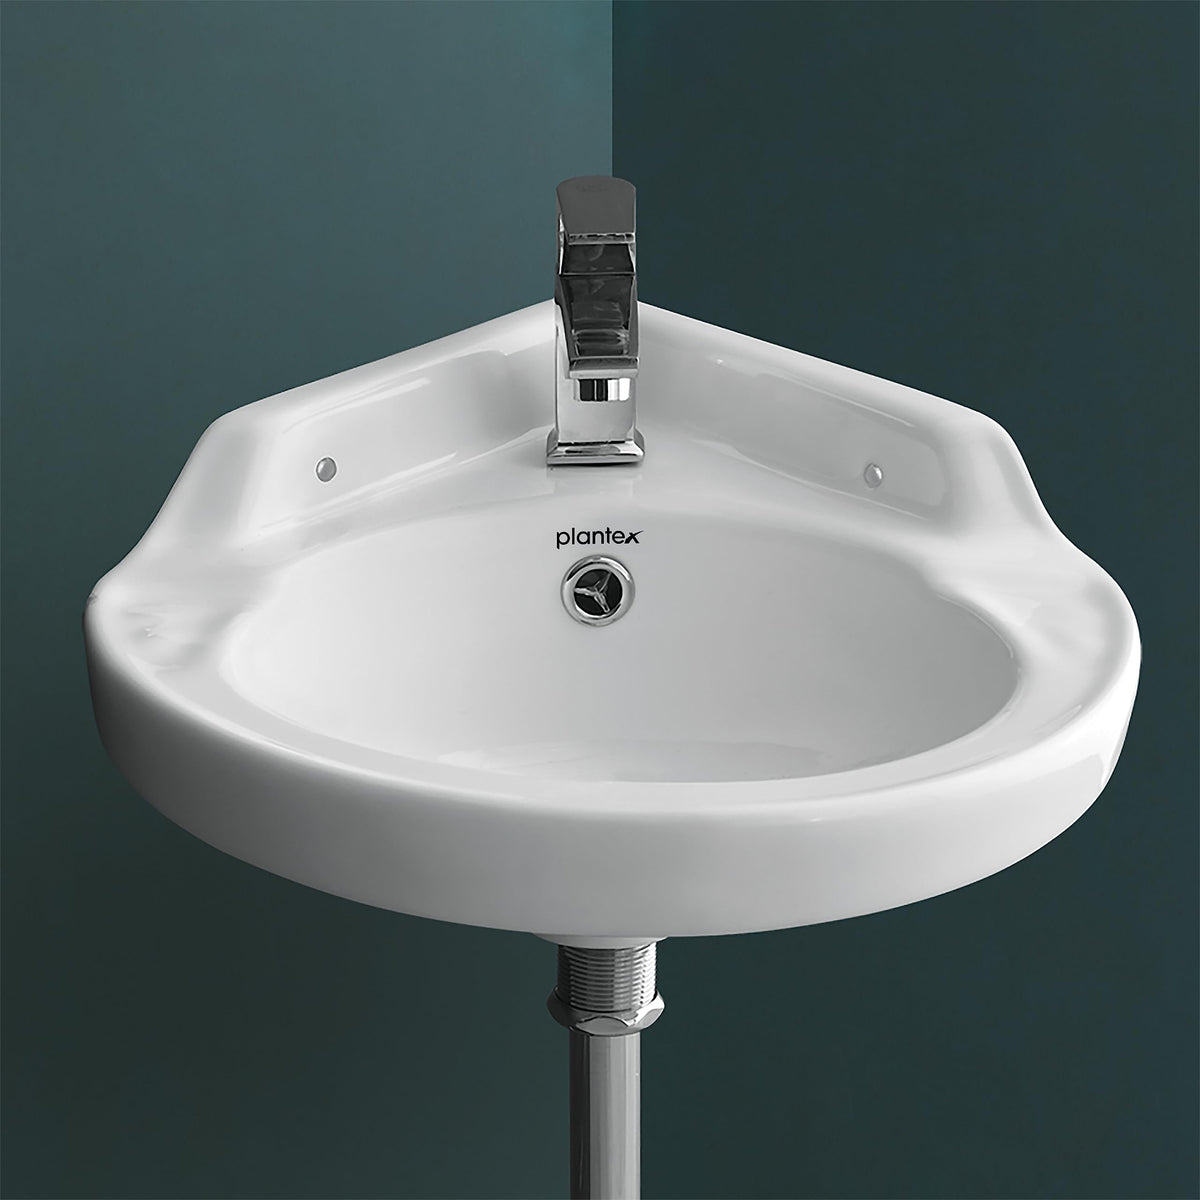 Plantex Ceramic Corner Basin for Bathroom/Kitchen/Wall-Hung Hand Wash Basin - White (Breva)